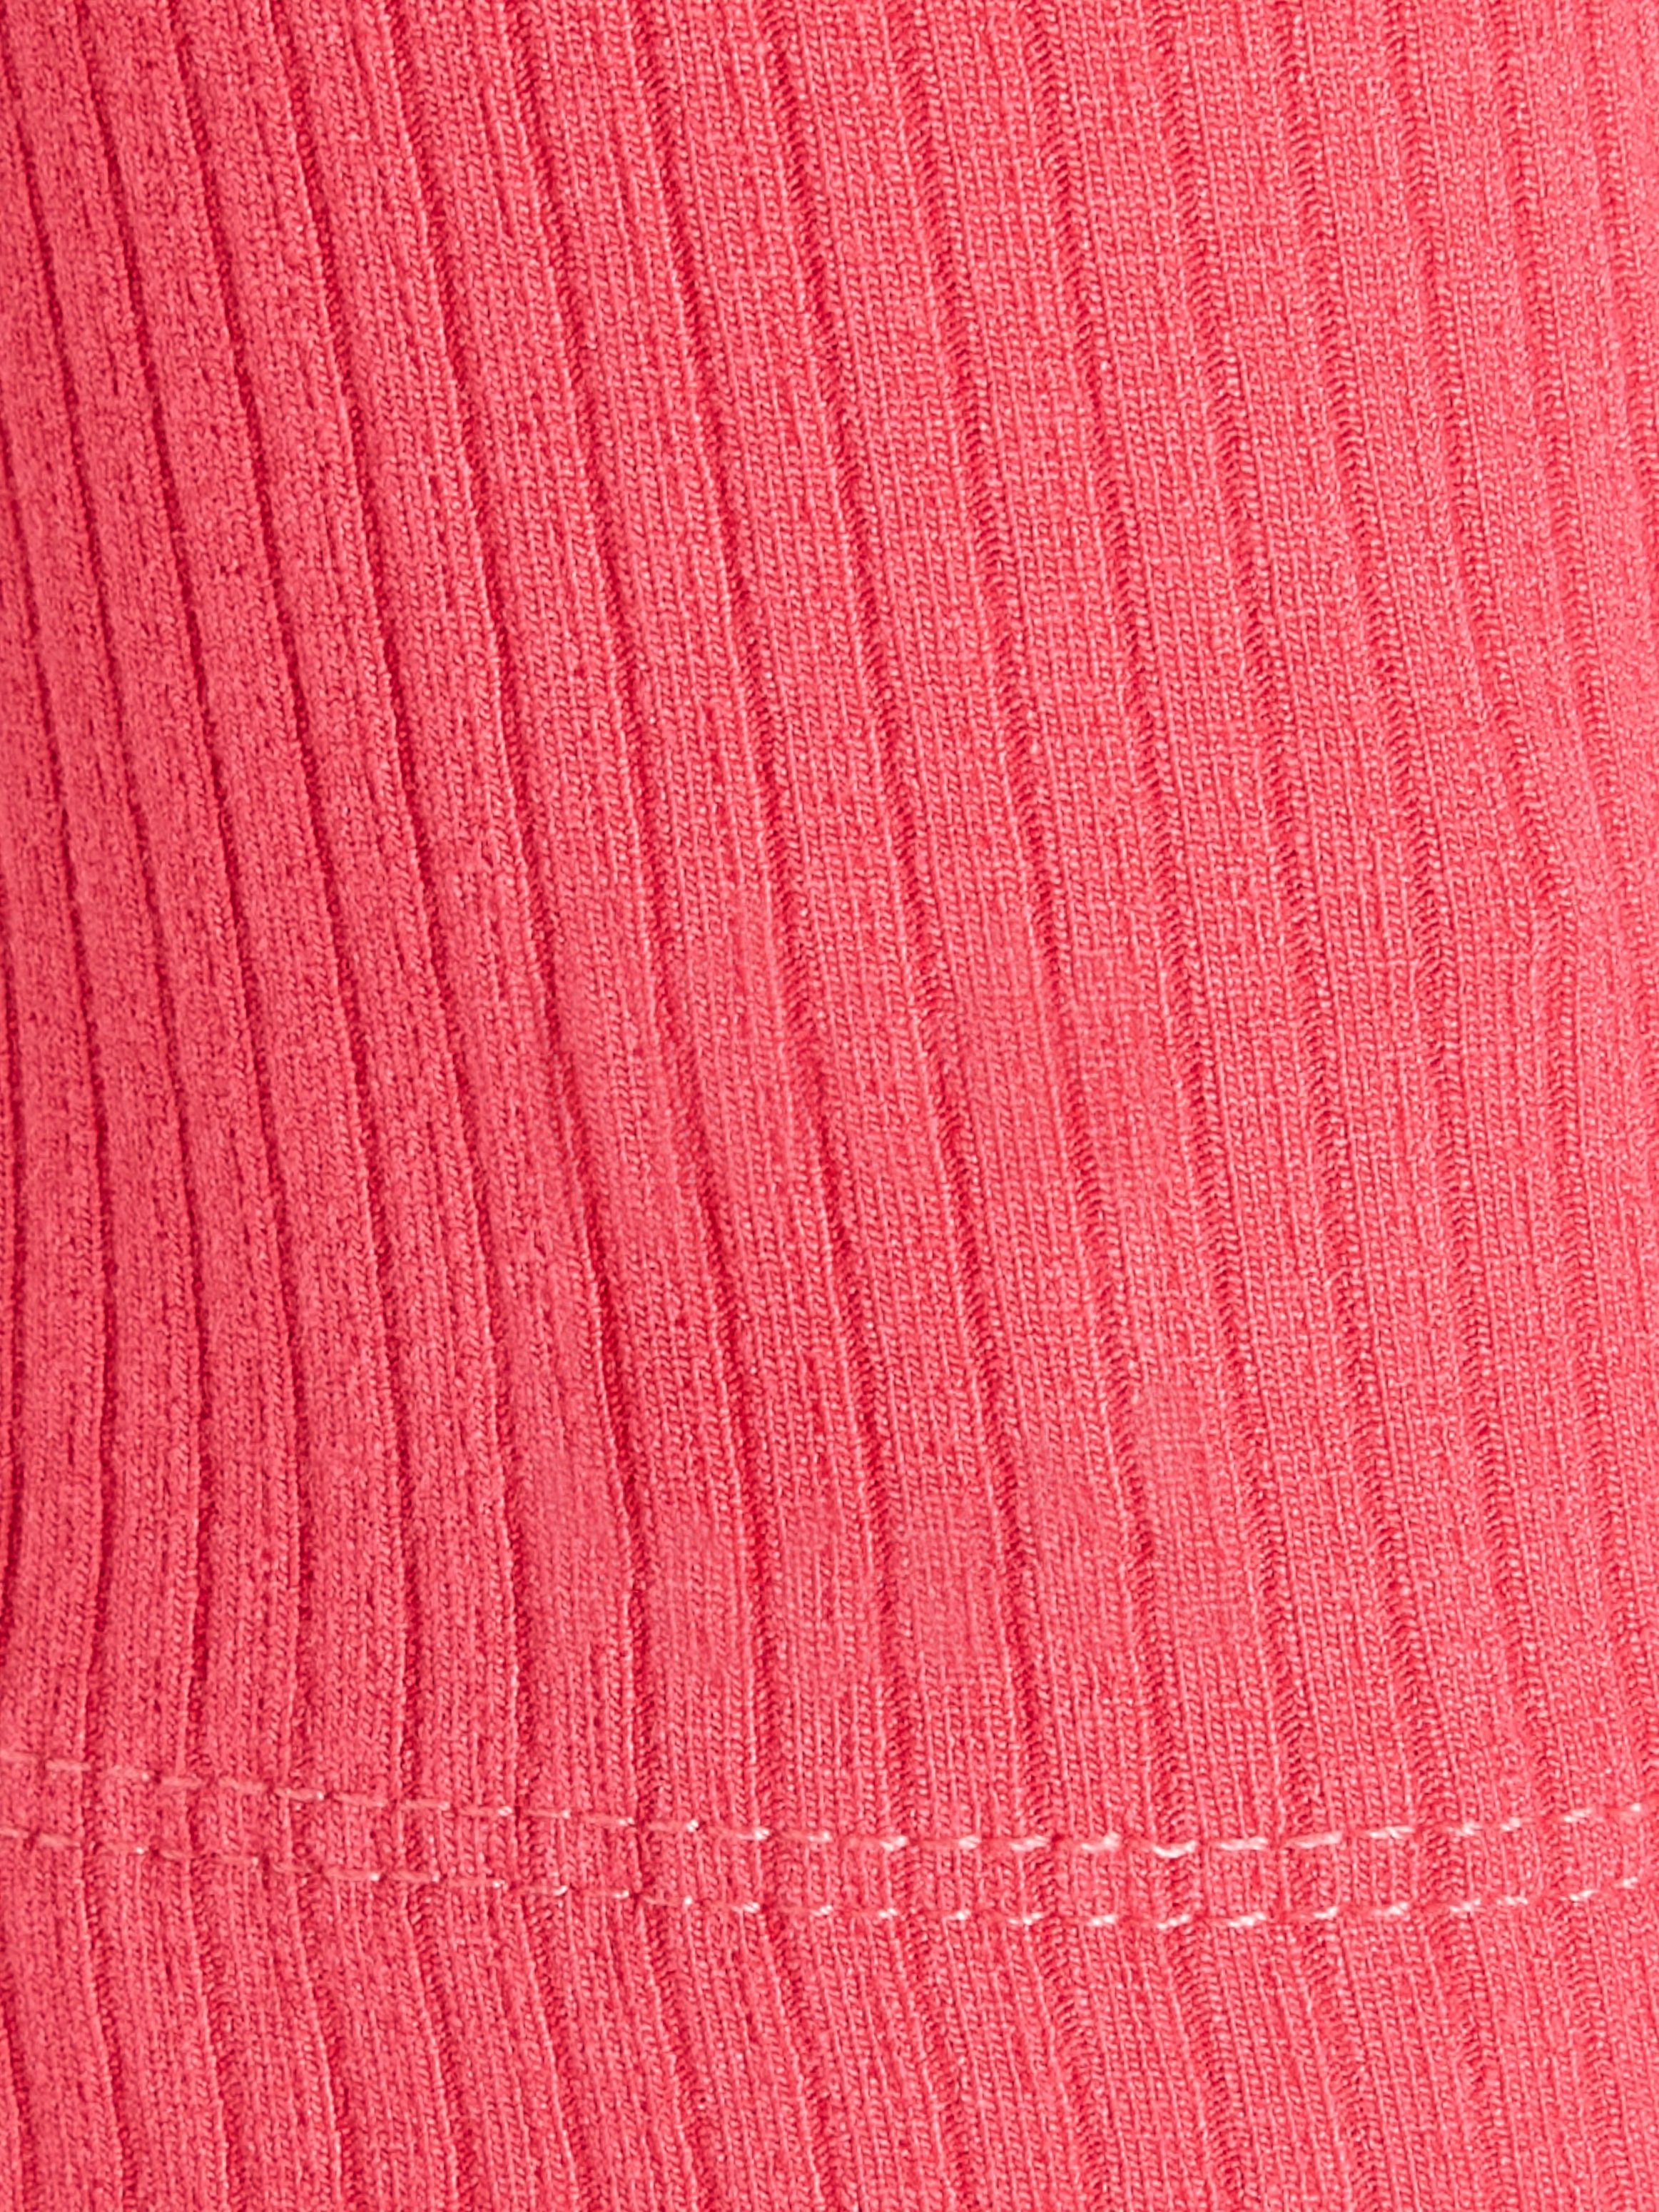 POLO 5X2 langer Bright_Cerise_Pink Poloshirt Hilfiger Knopfleiste mit RIB Tommy SLIM